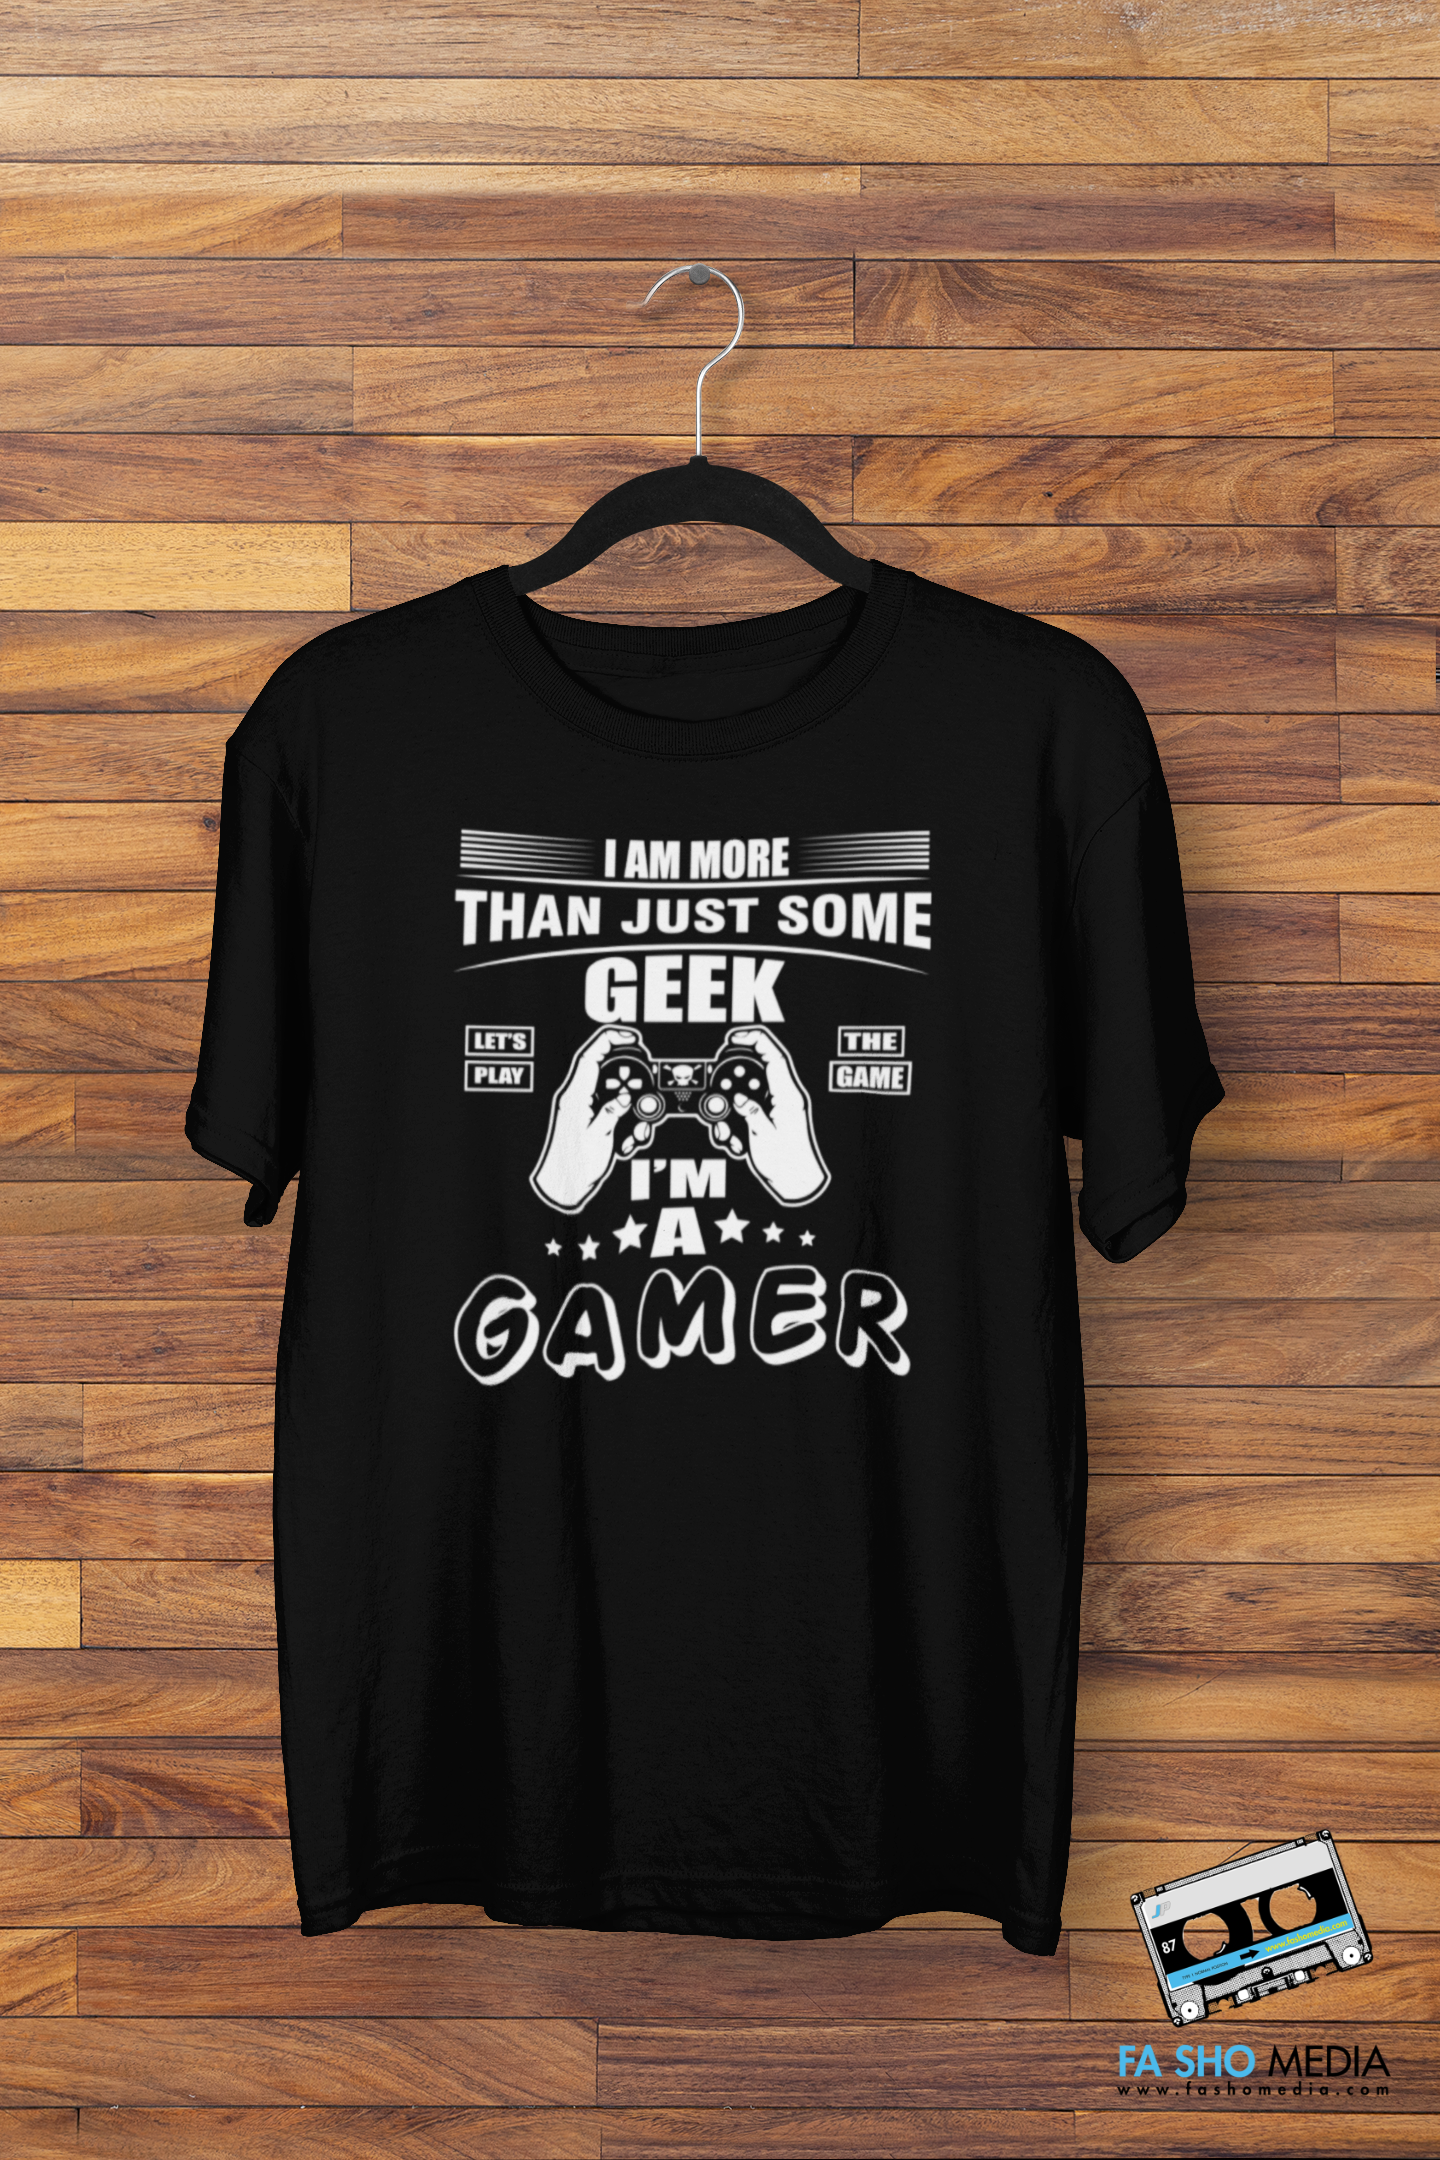 I'm a Gamer Shirt (Men's)